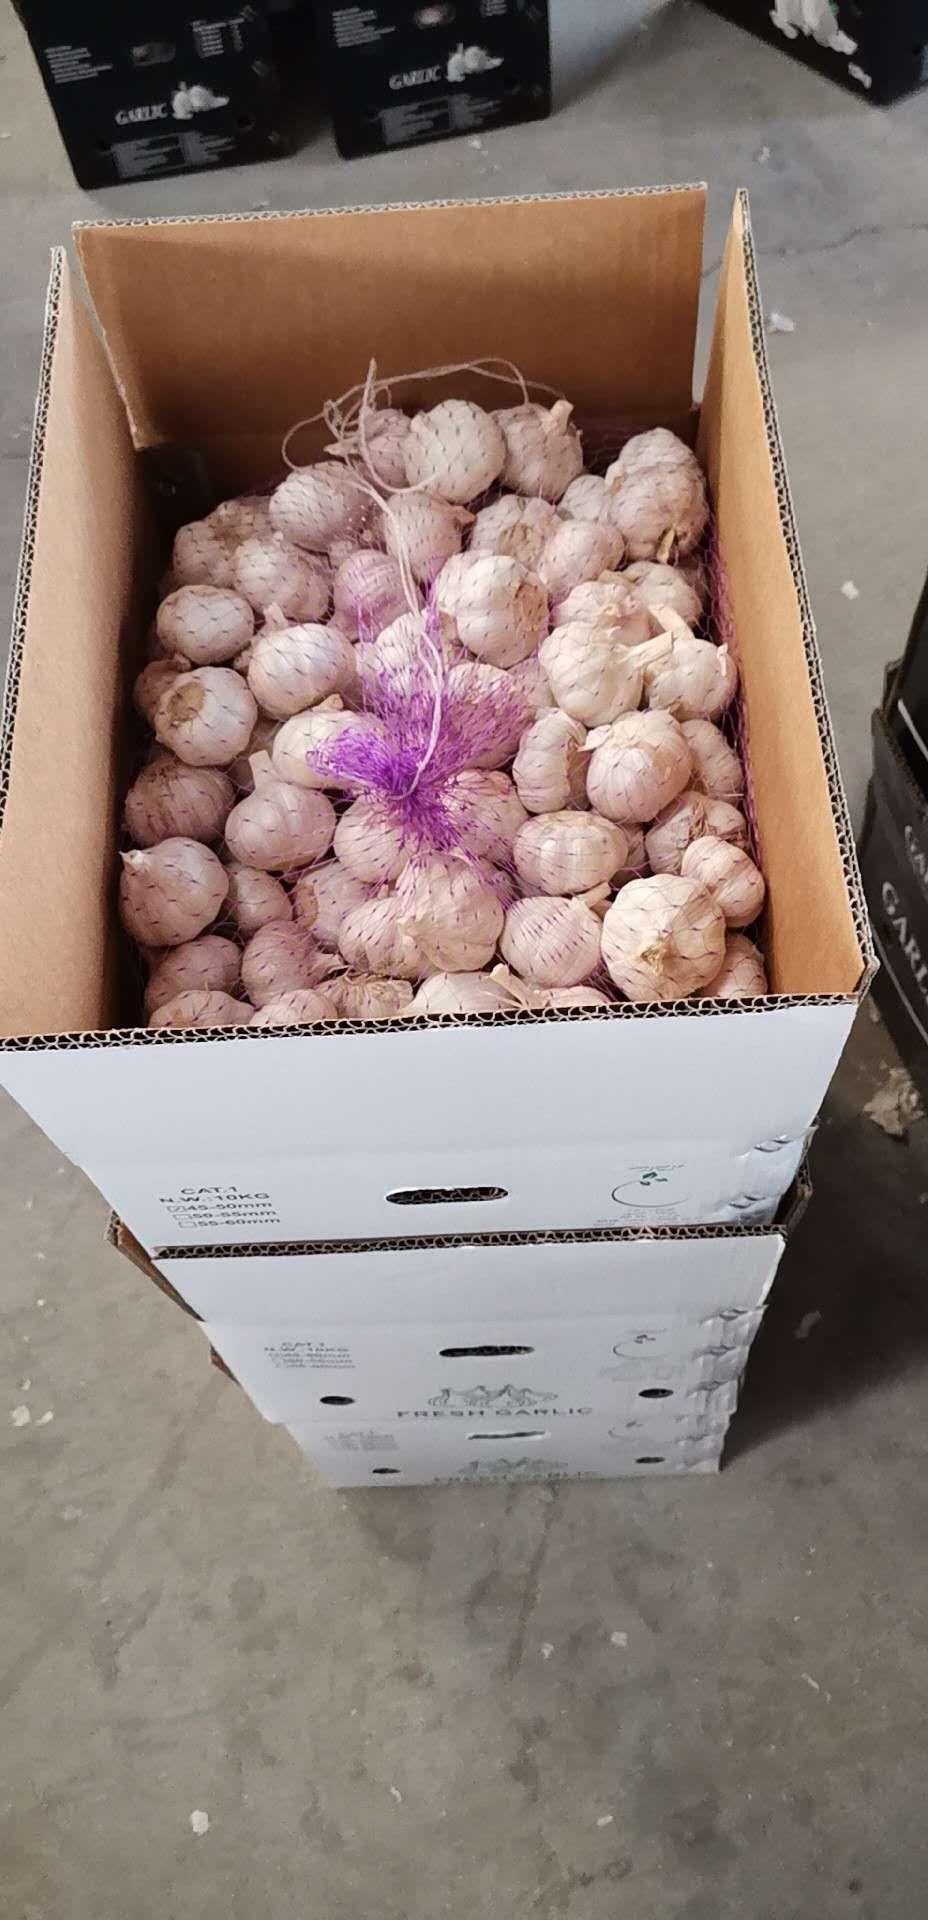 China Garlic Market Report-Feb.12th,2019